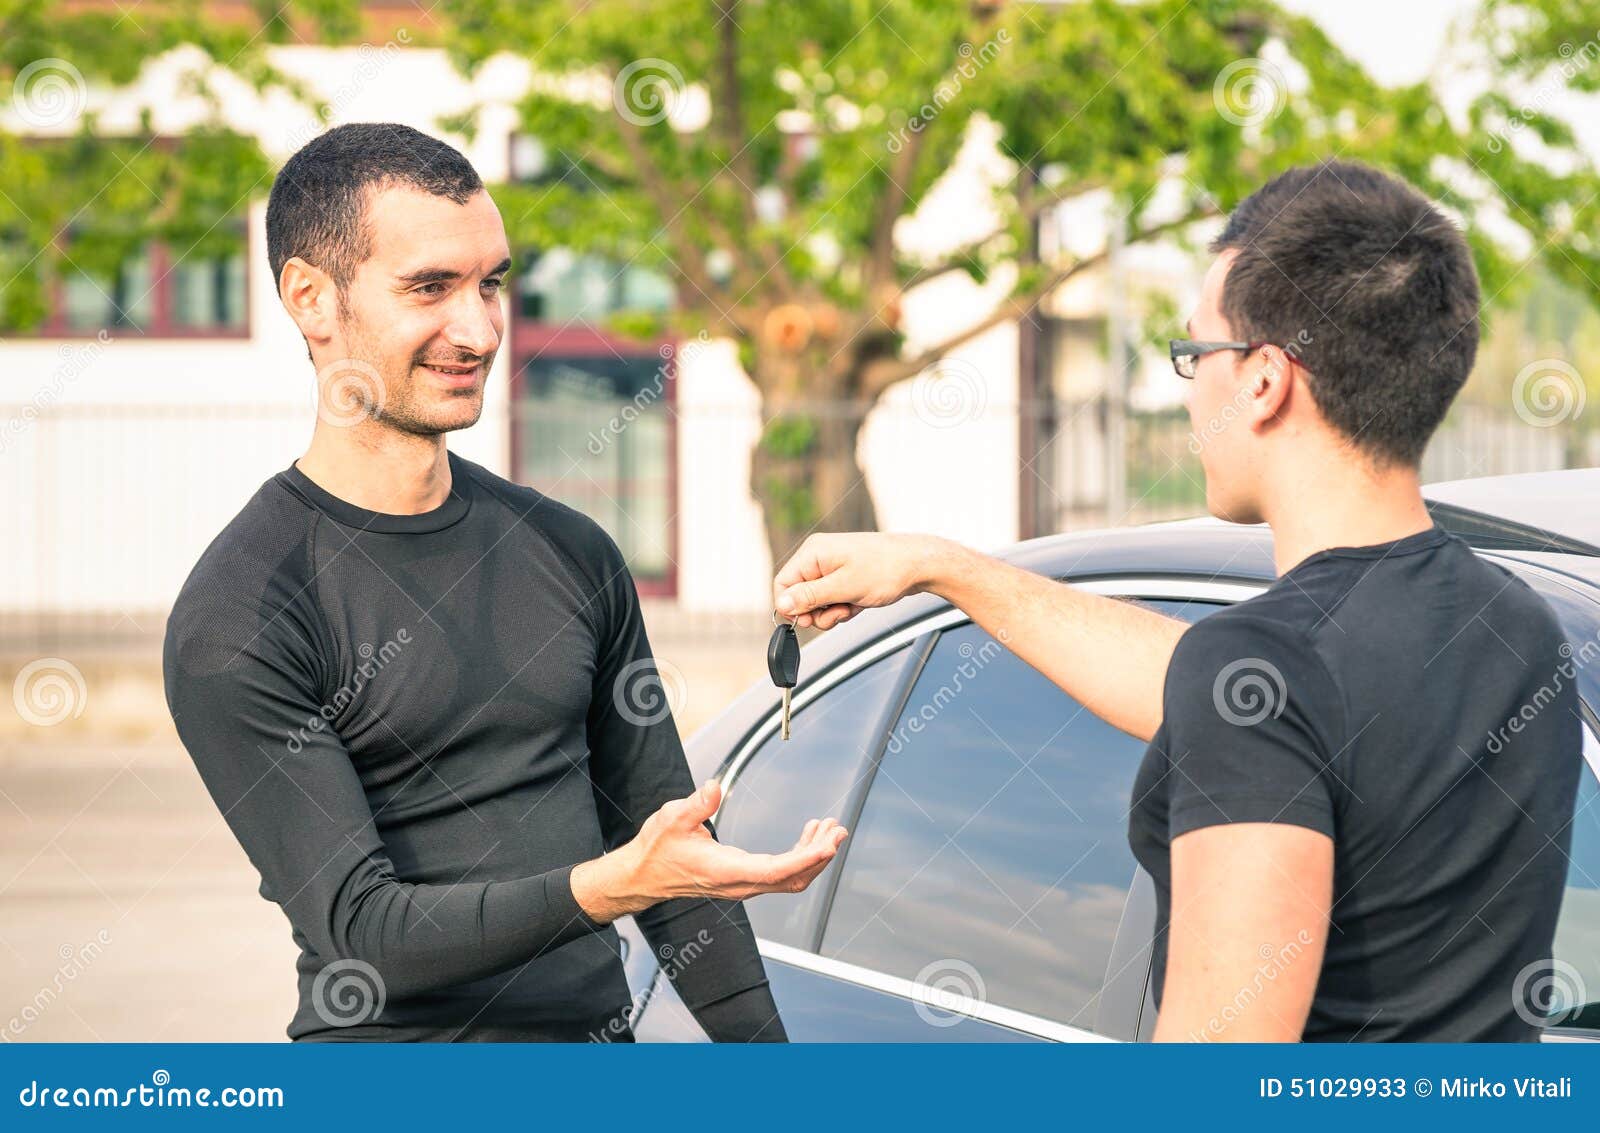 satisfied buyer man receiving car keys after second hand sale